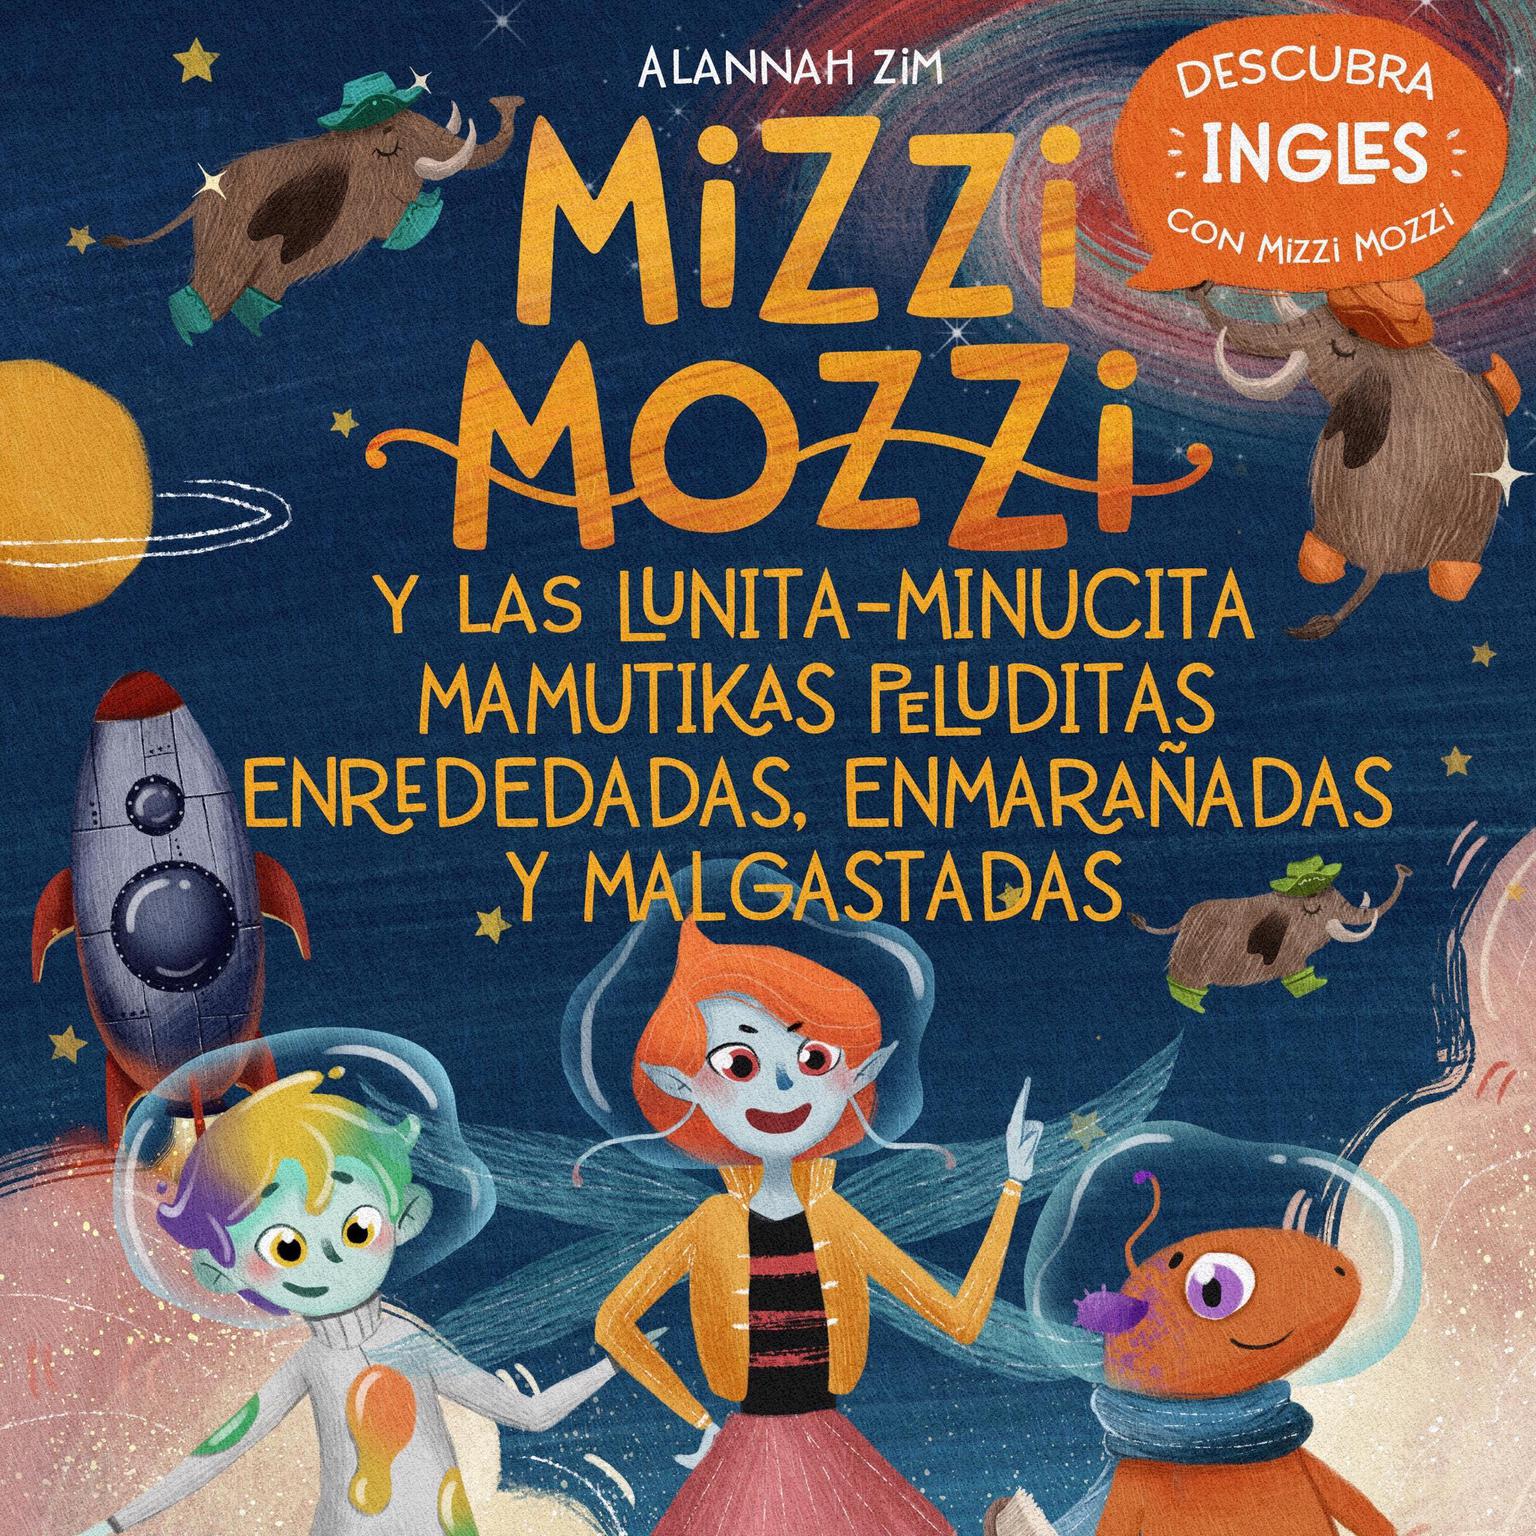 MIZZI MOZZI Y LAS MAMUTIKAS PELUDITAS DE LA LUNITA-MINUCITA ENREDEDADAS, ENMARAÑADAS MALGASTADAS Audiobook, by Alannah Zim